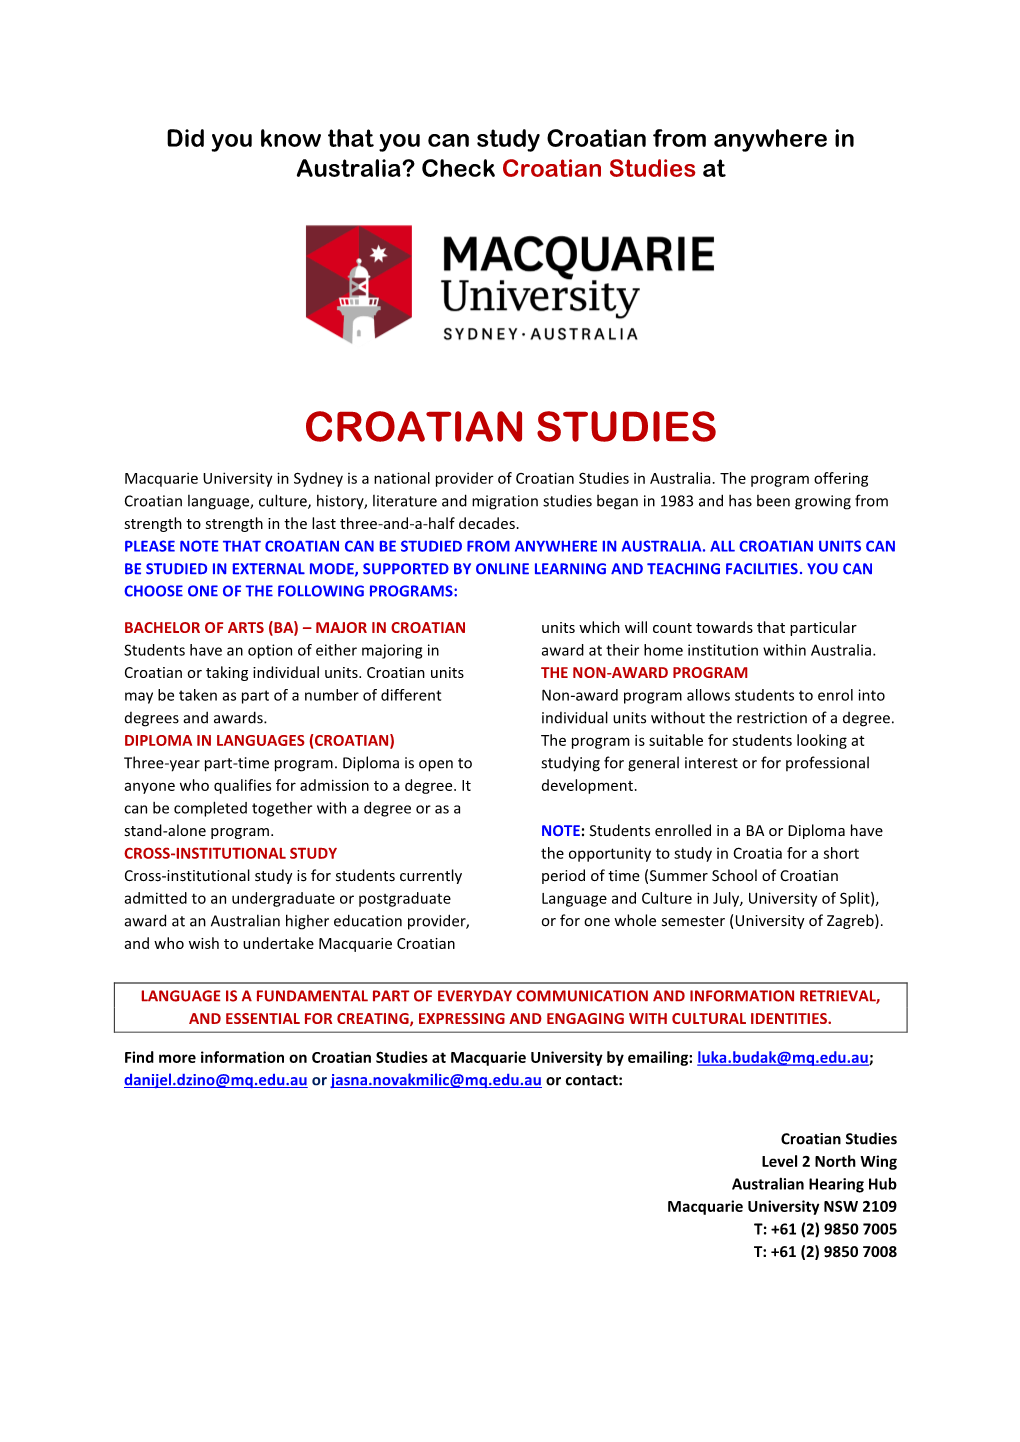 Croatian Studies Foundation